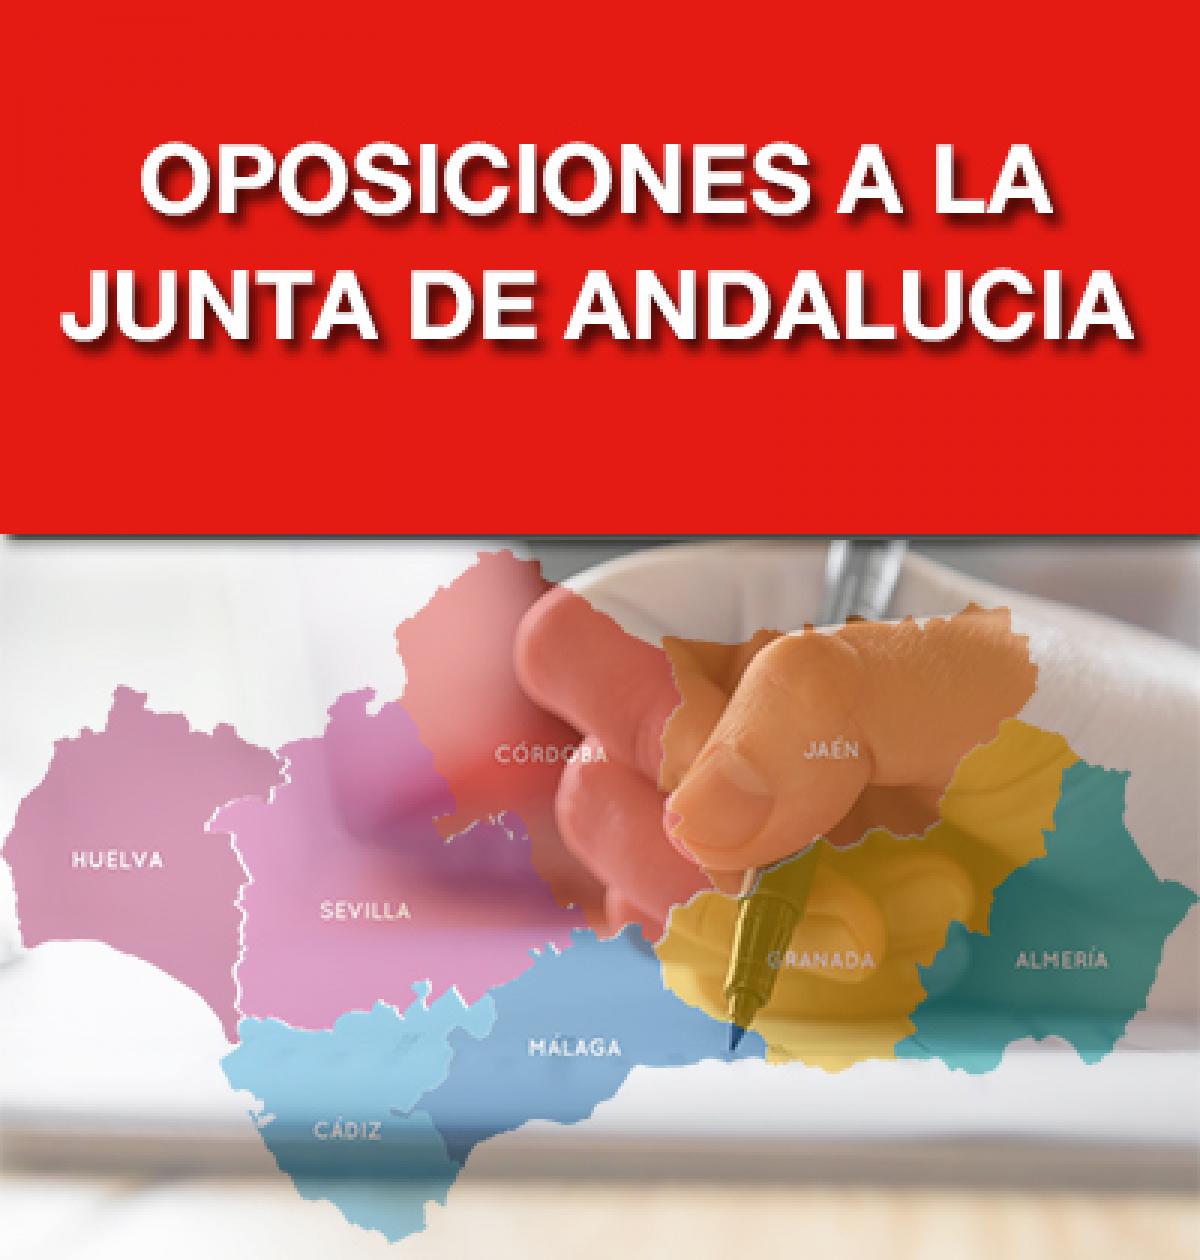 Oposiciones a la Junta de Andaluca